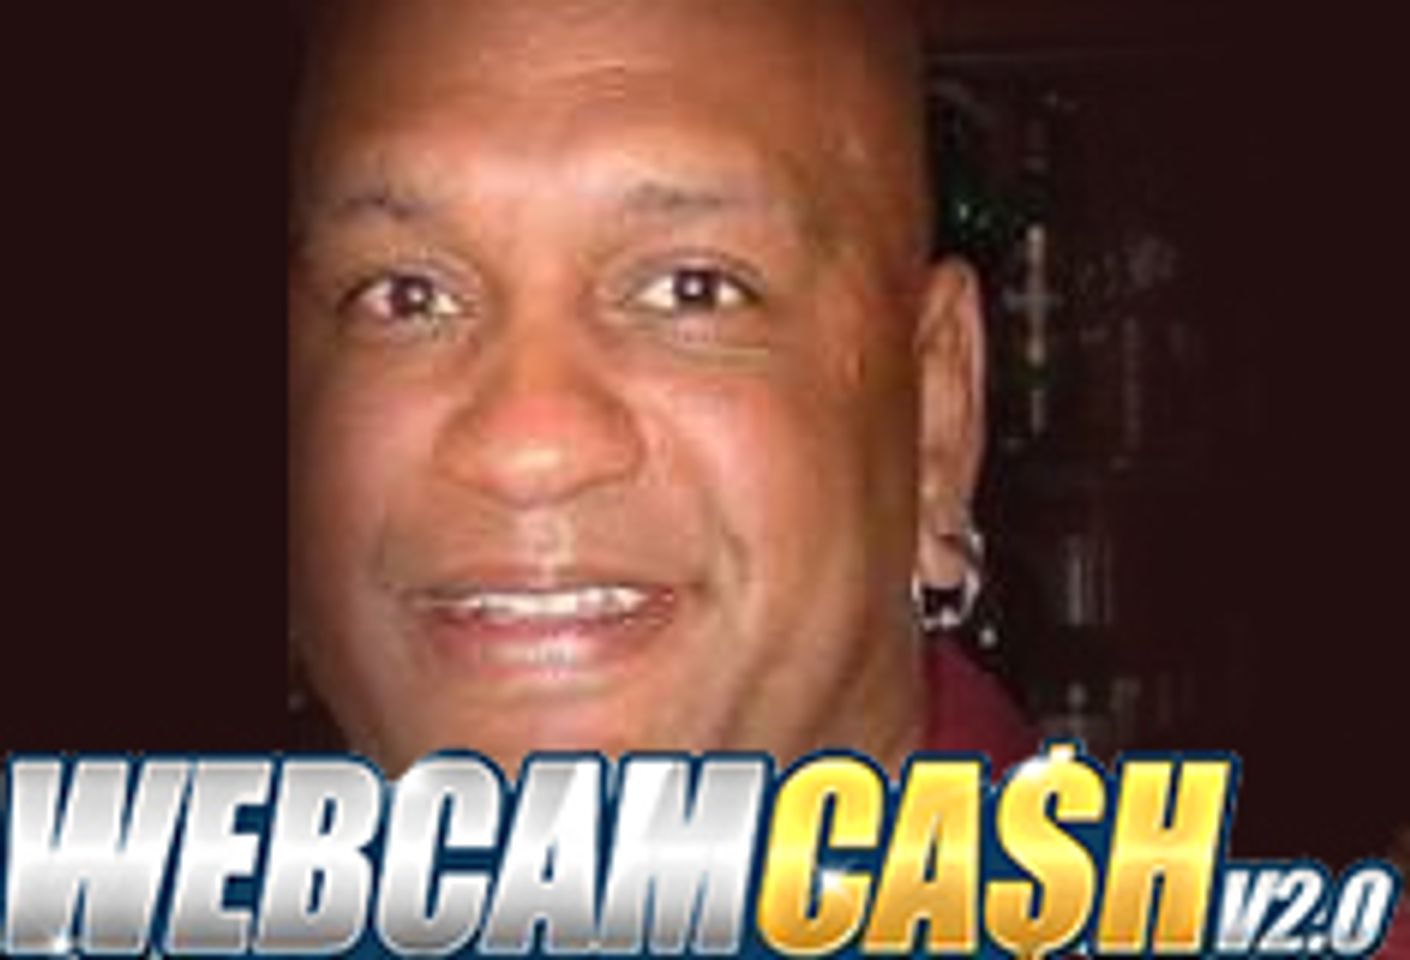 WebcamCash Hires Senior Manager of Affiliate Relations